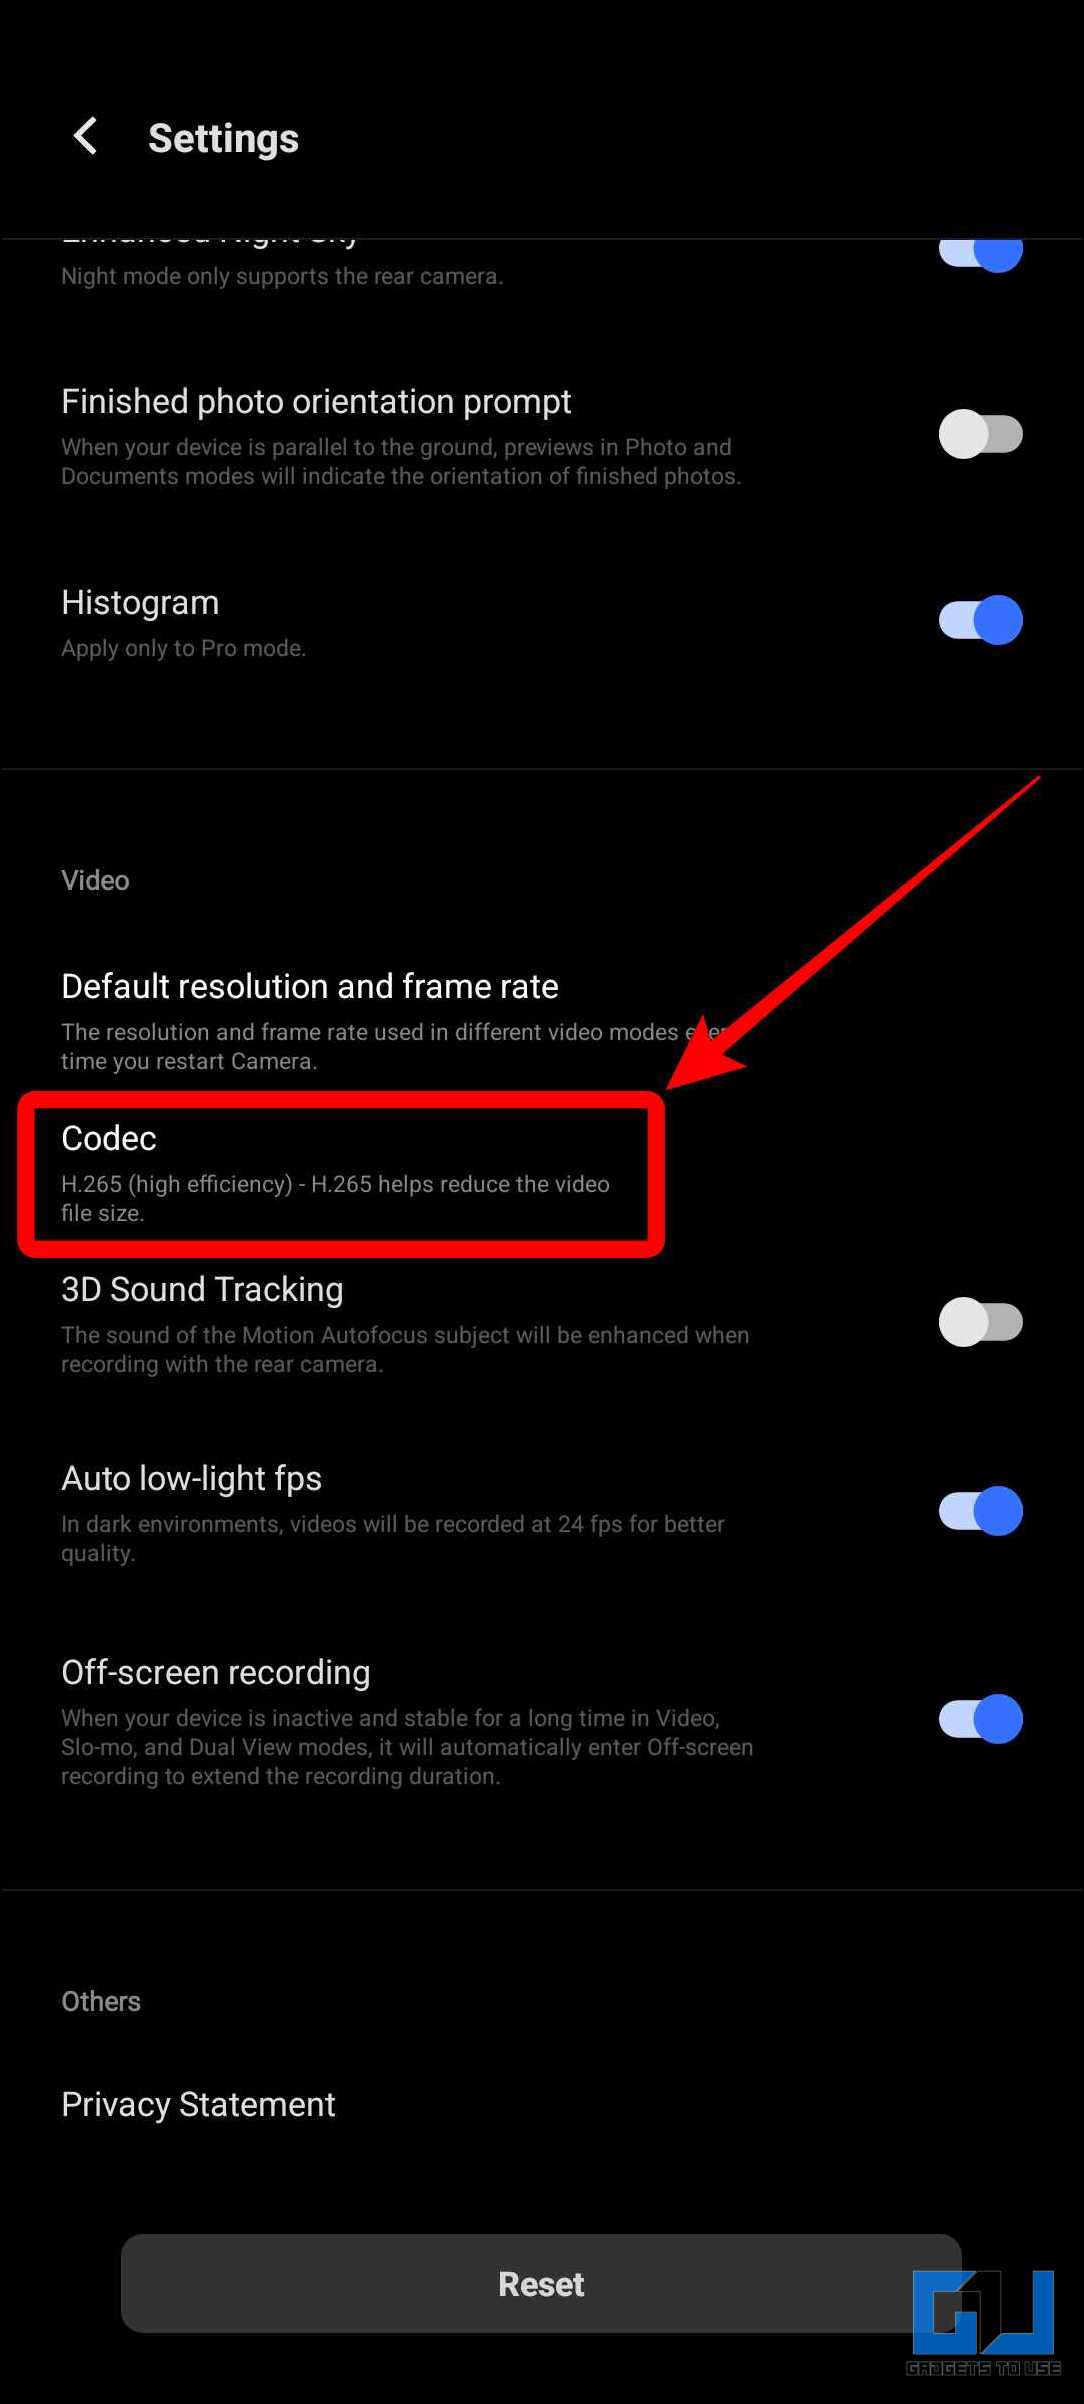 Codec menu in camera settings highlighted in red.